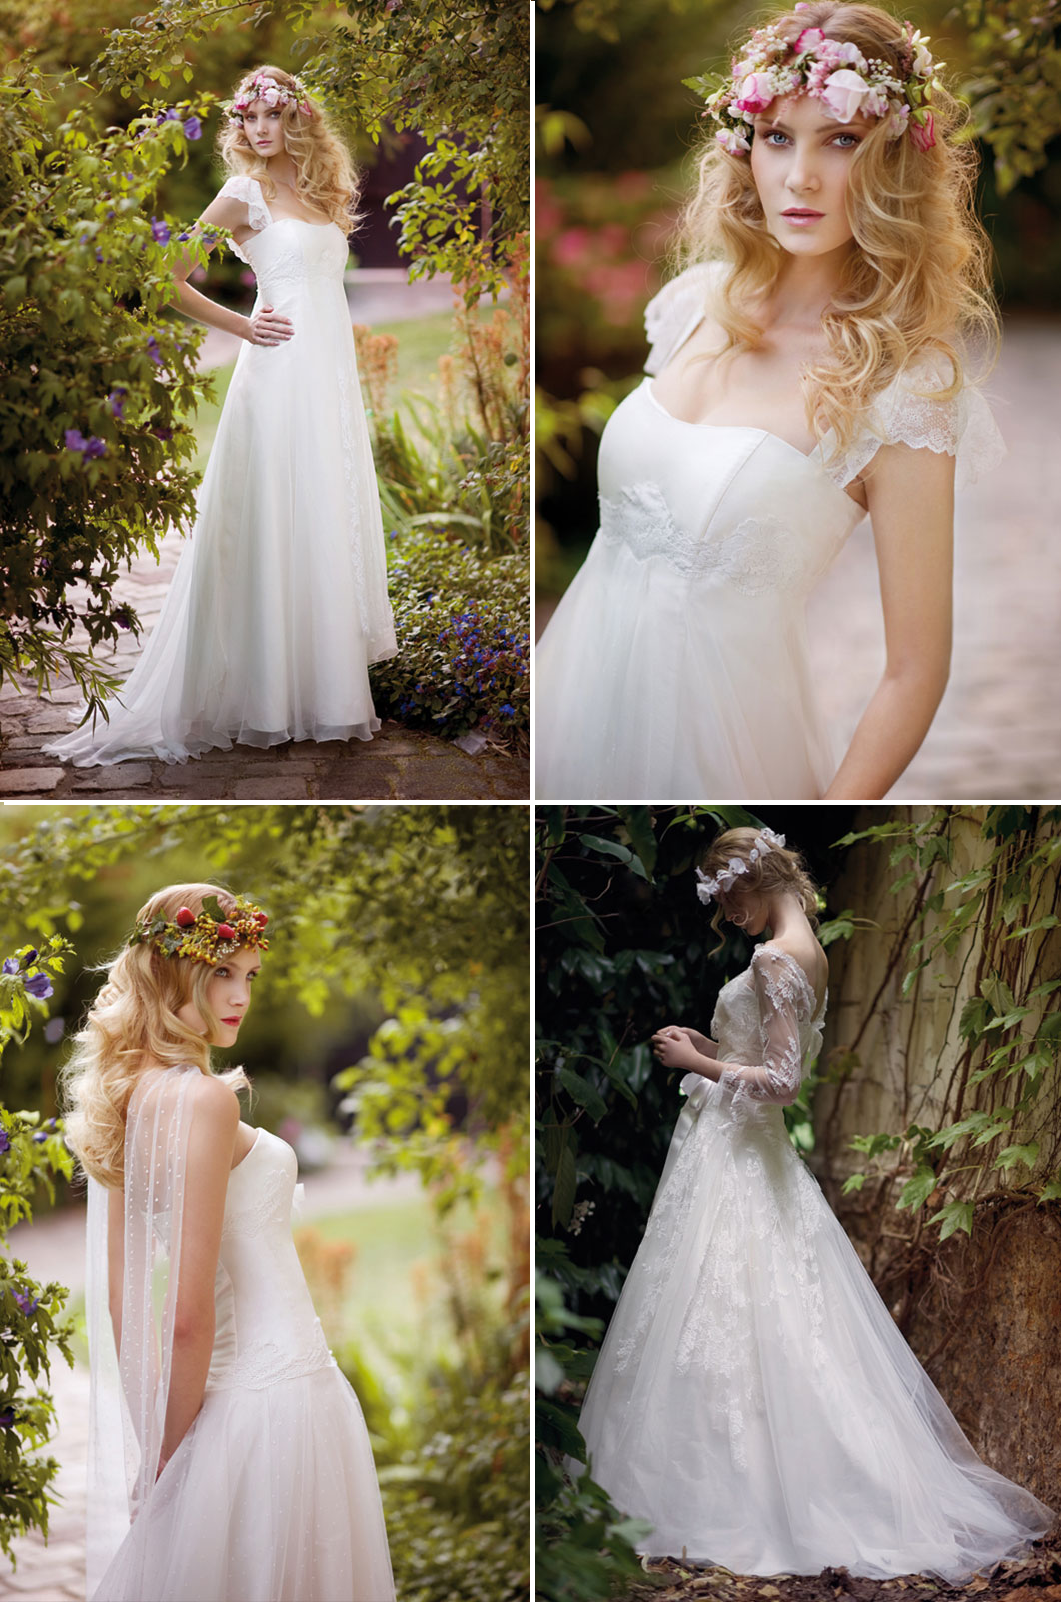 Romantic bohemian wedding dresses Photo - 9